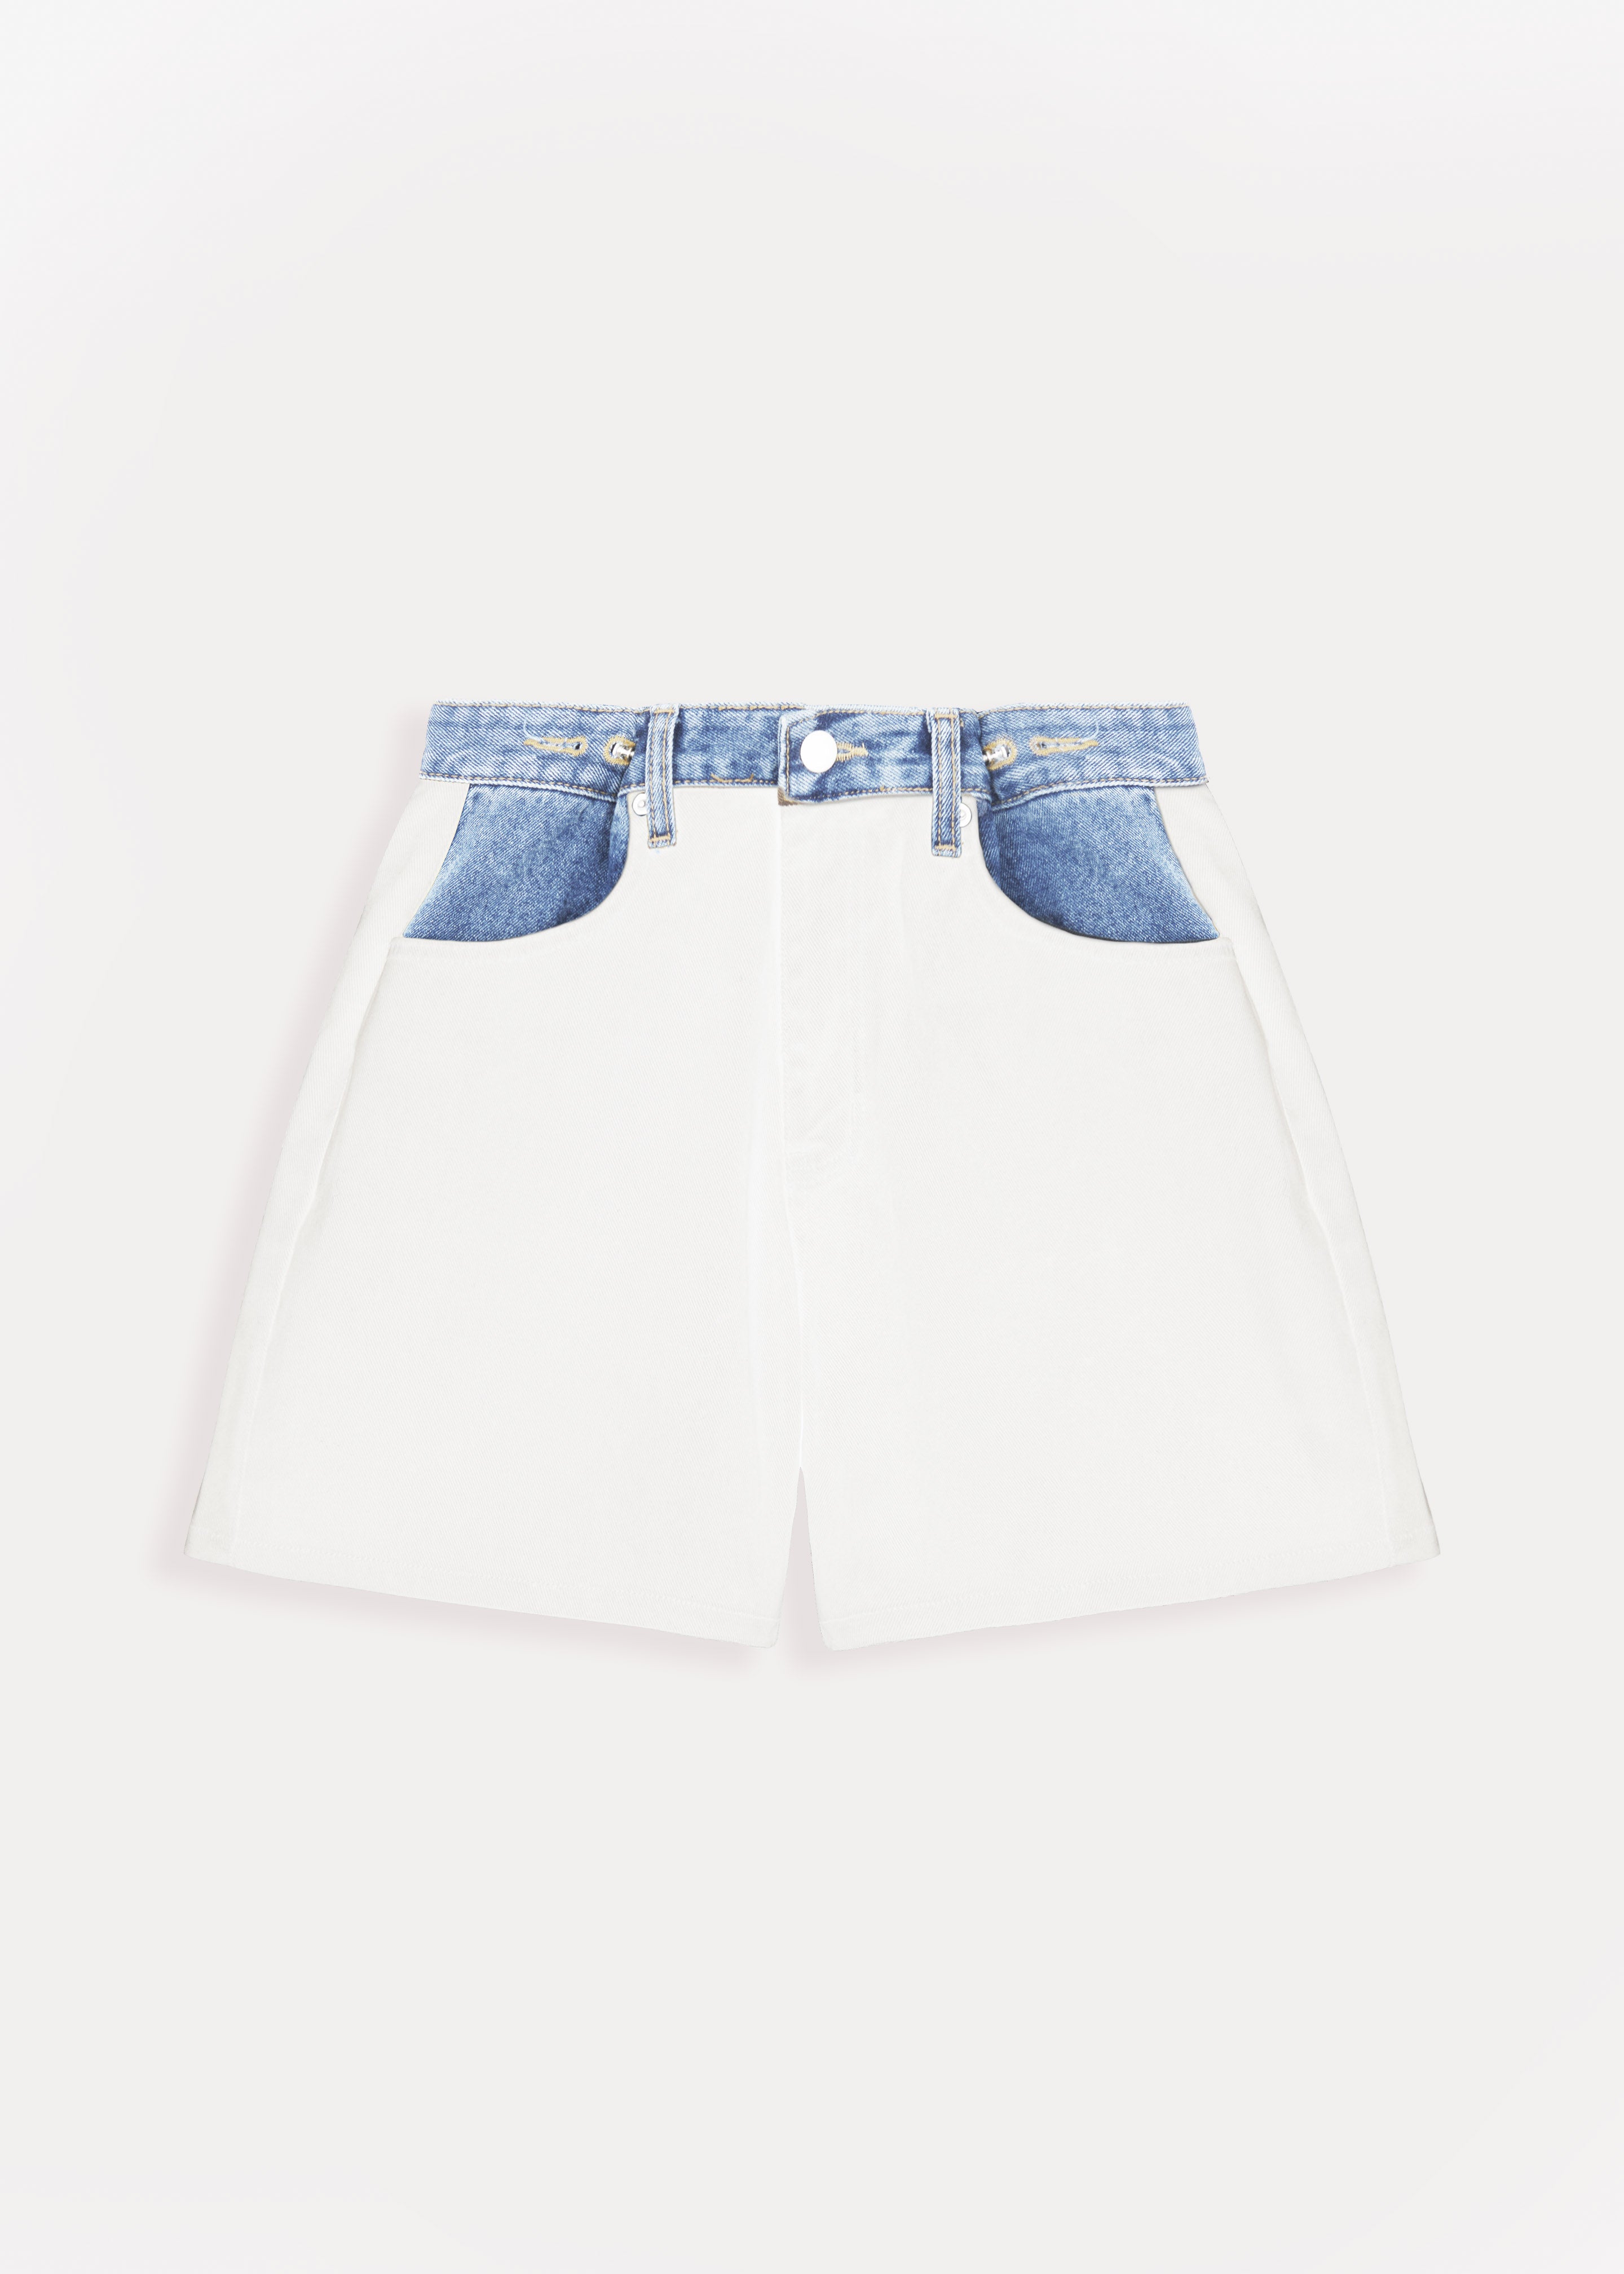 Hayla Contrast Denim Shorts - Off White/Blue - 13